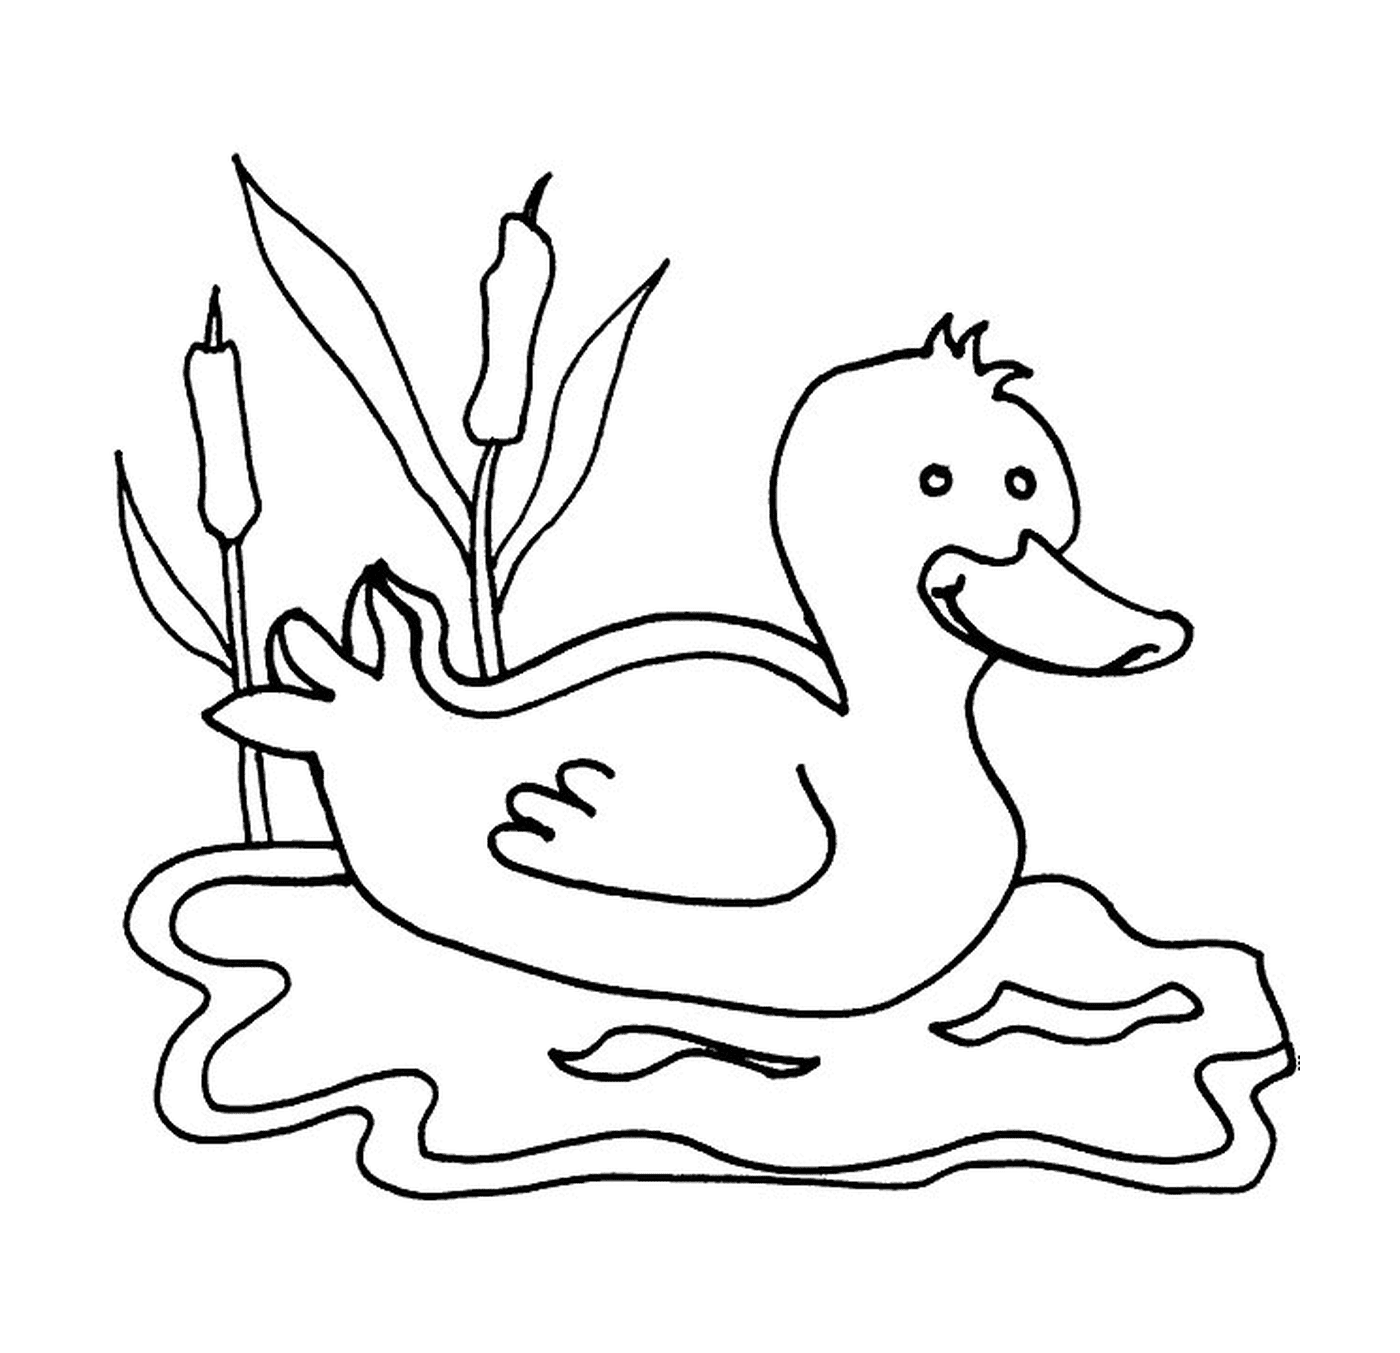  Um pato na água 